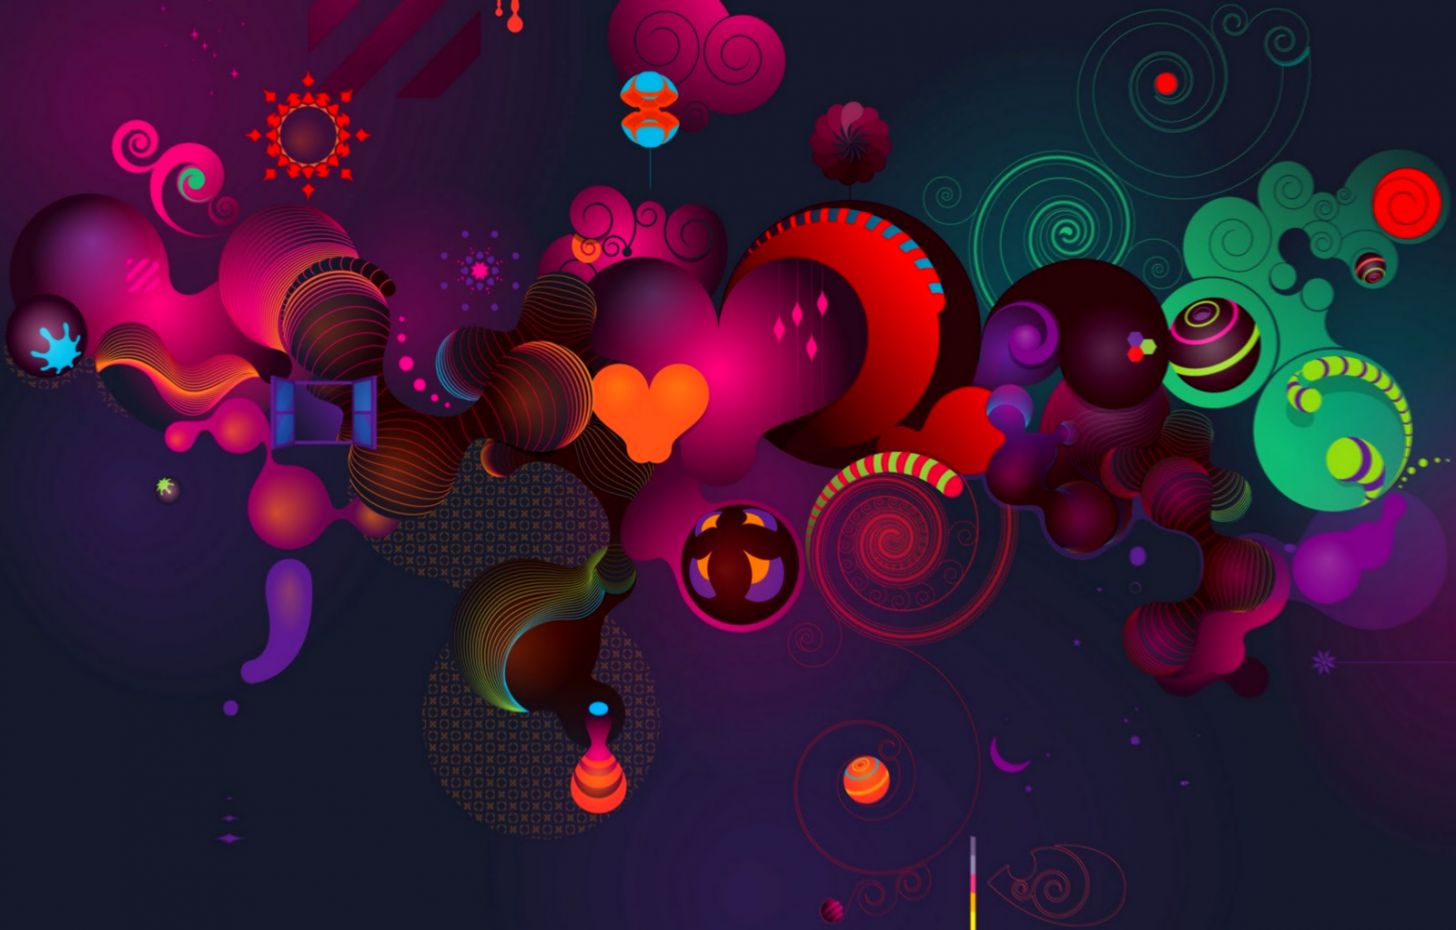 laptop wallpapers hd for windows 7,violet,graphic design,purple,magenta,fractal art